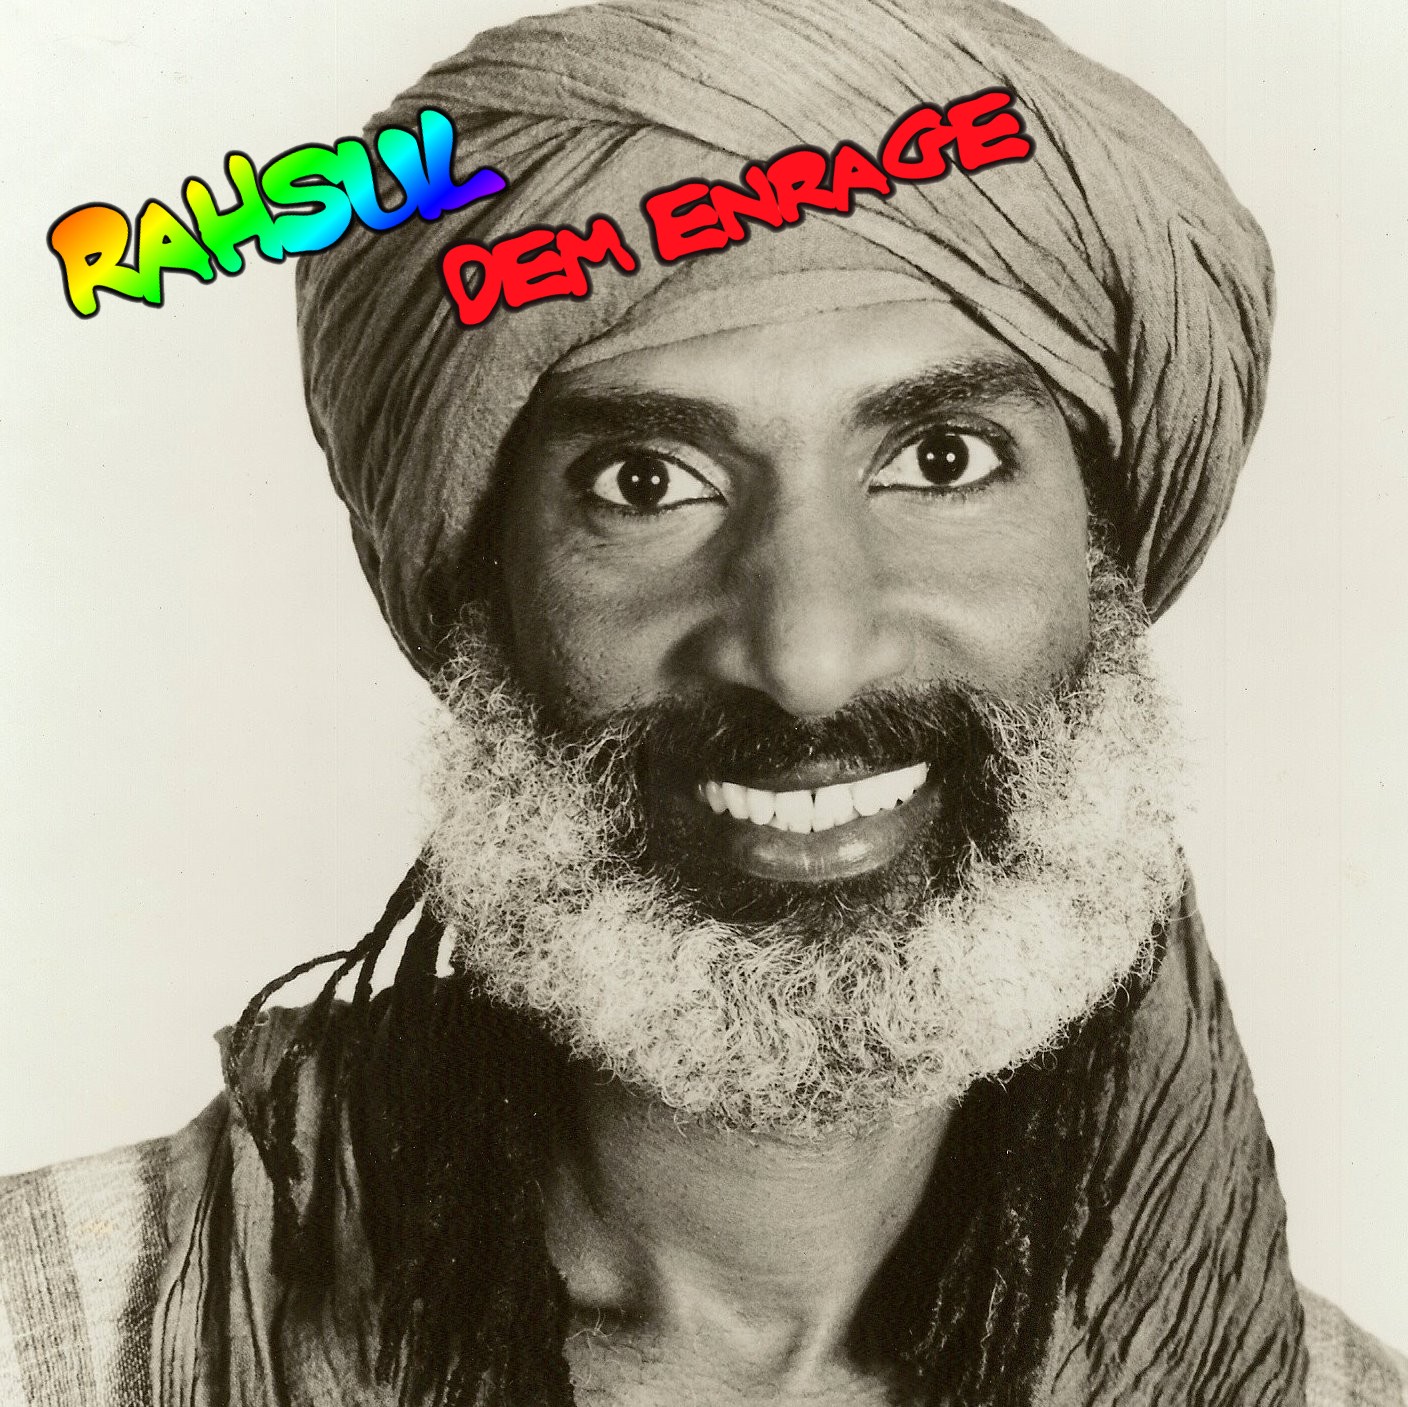 Rahsul "Dem Enrage" 1987 Caye Records - Produced by:George Hughes